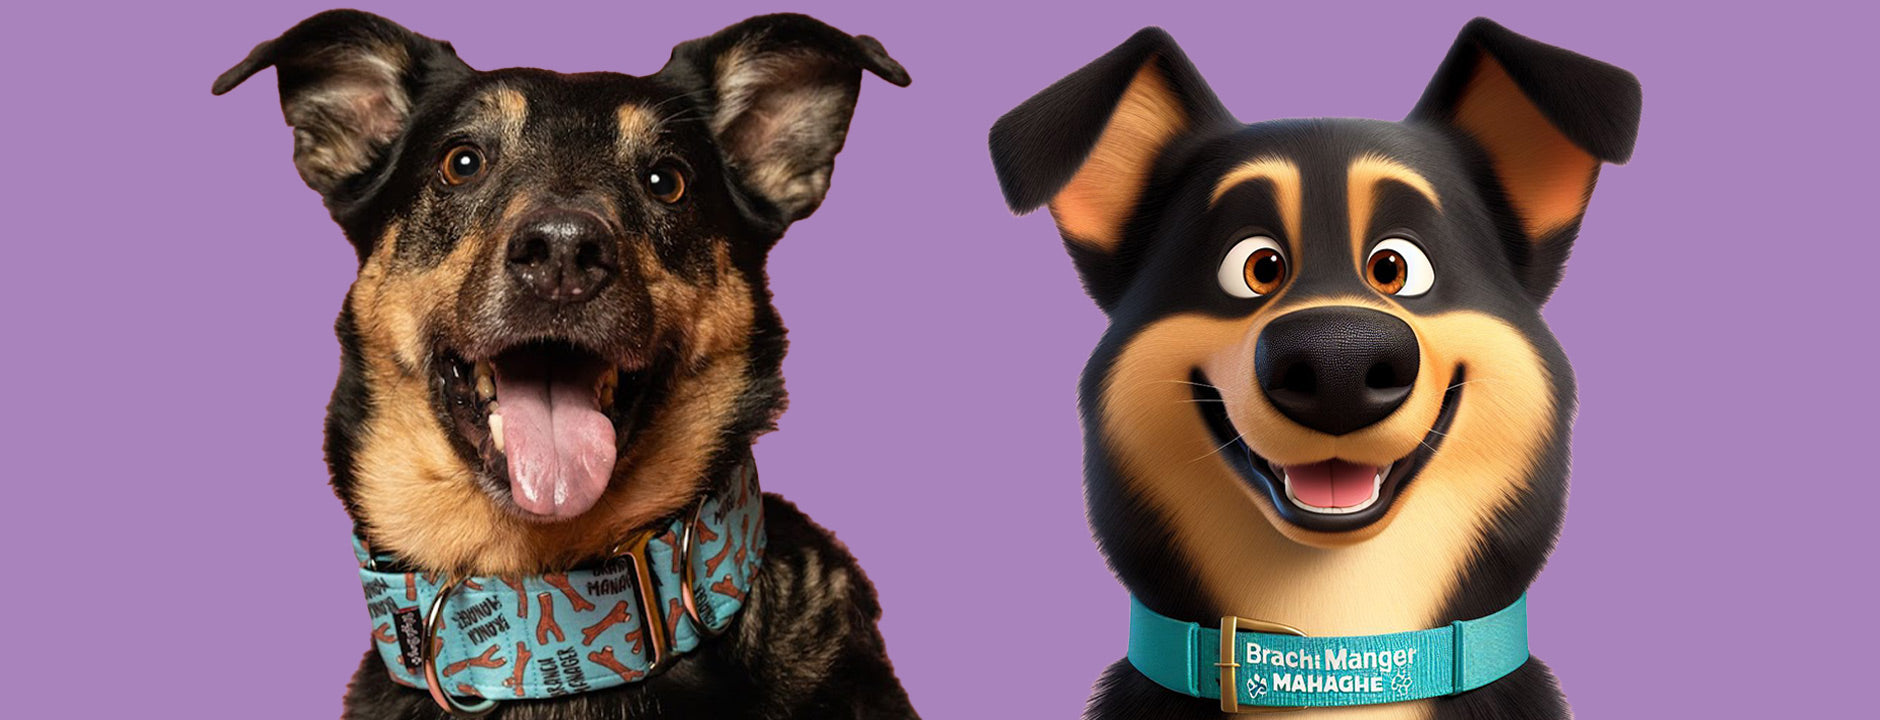 How to do the Disney Pixar AI Dog Trend with Microsoft's Bing Image Creator